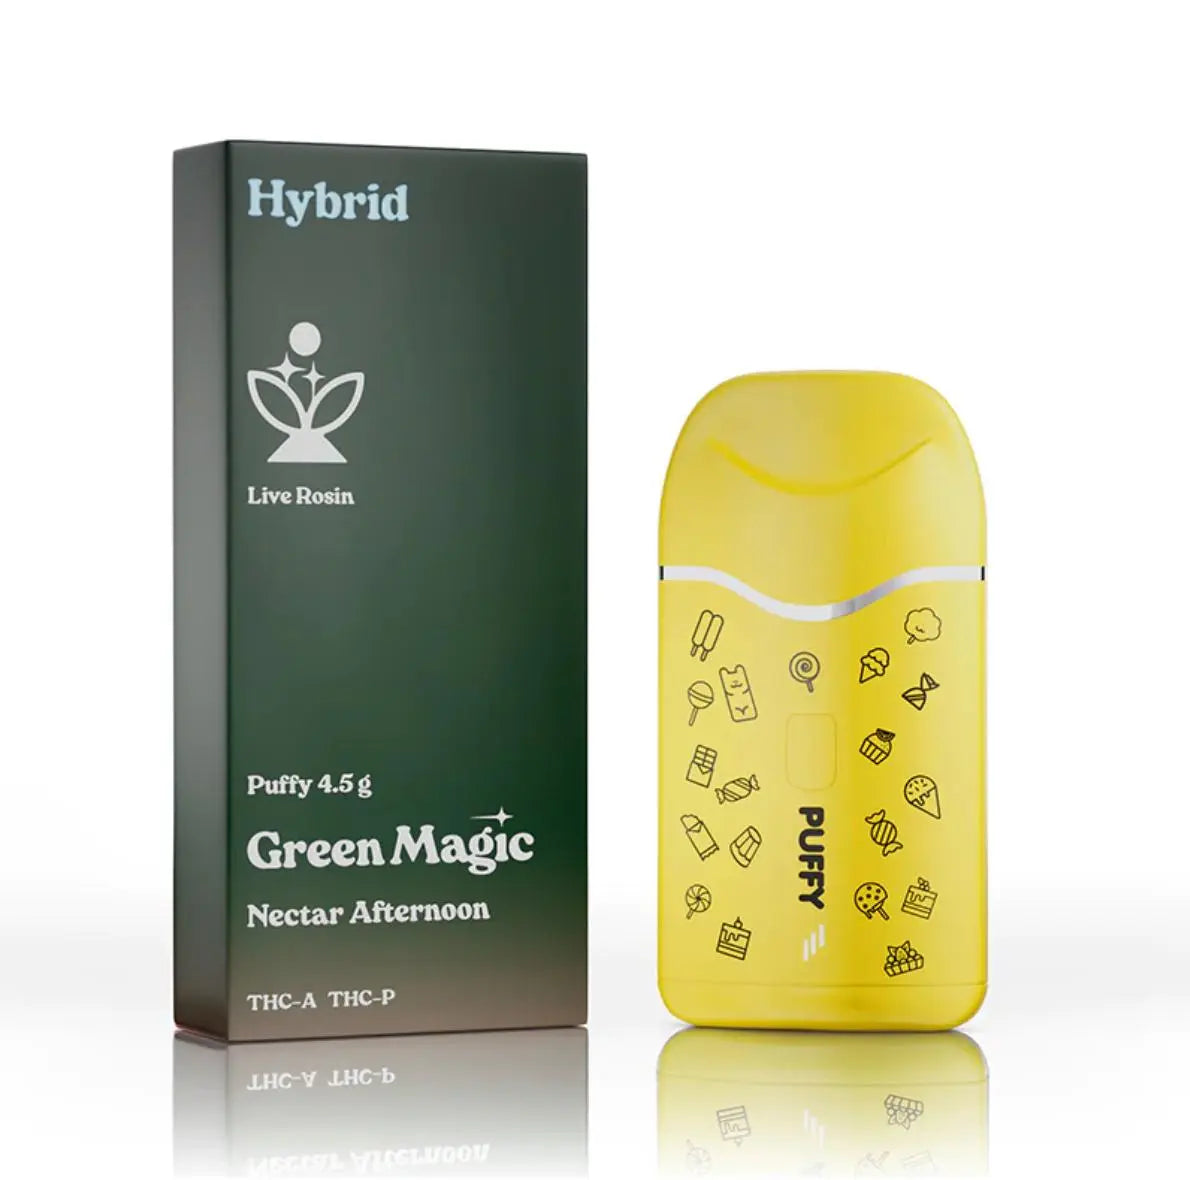 PUFFY 4.5G - Nectar Afternoon - (Green Magic) Hybrid Siesta G  Siesta G Dispensary